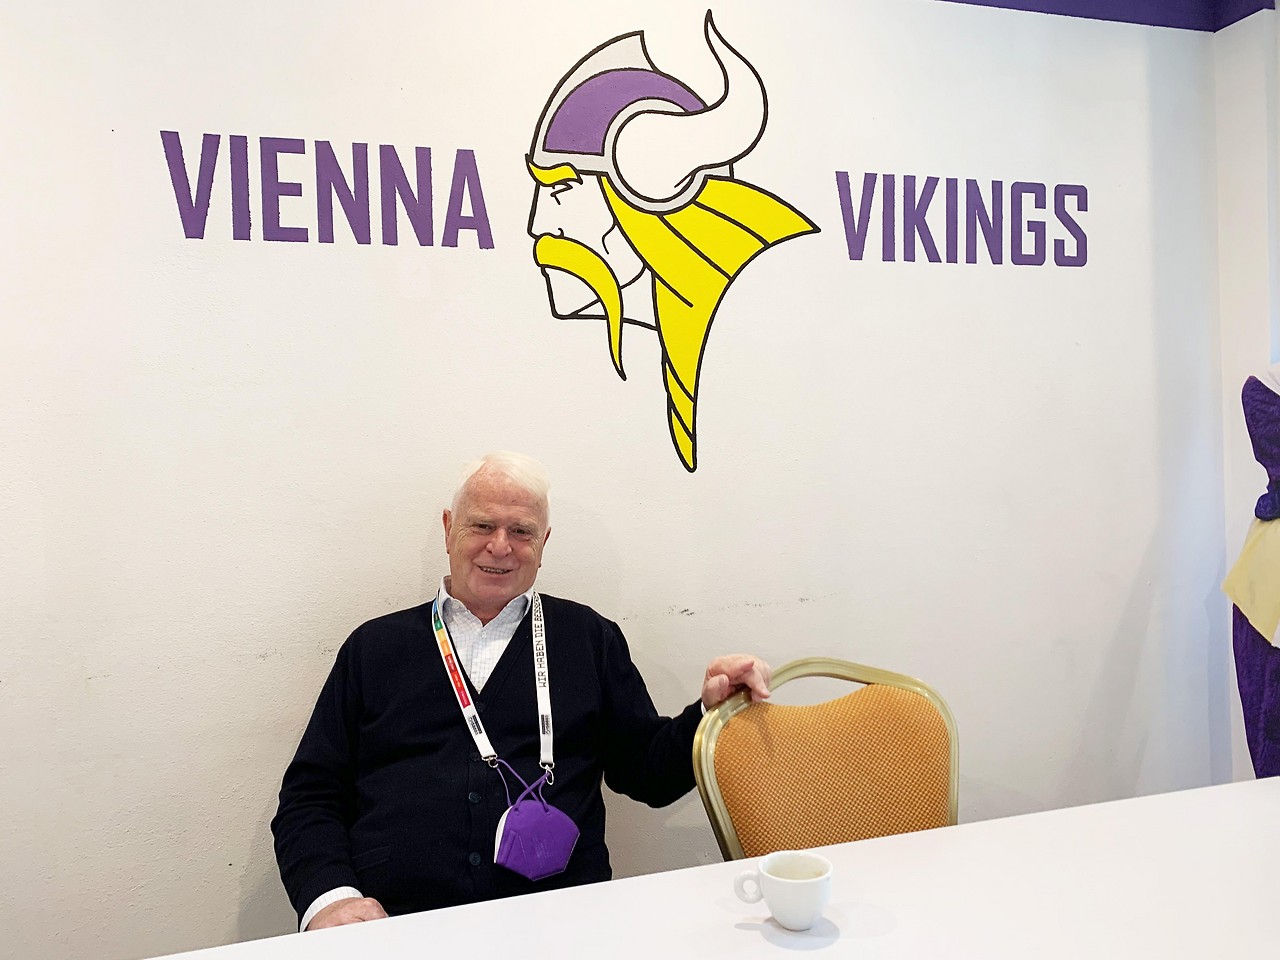 Karl Wurm, President of the Vikings of Vienna